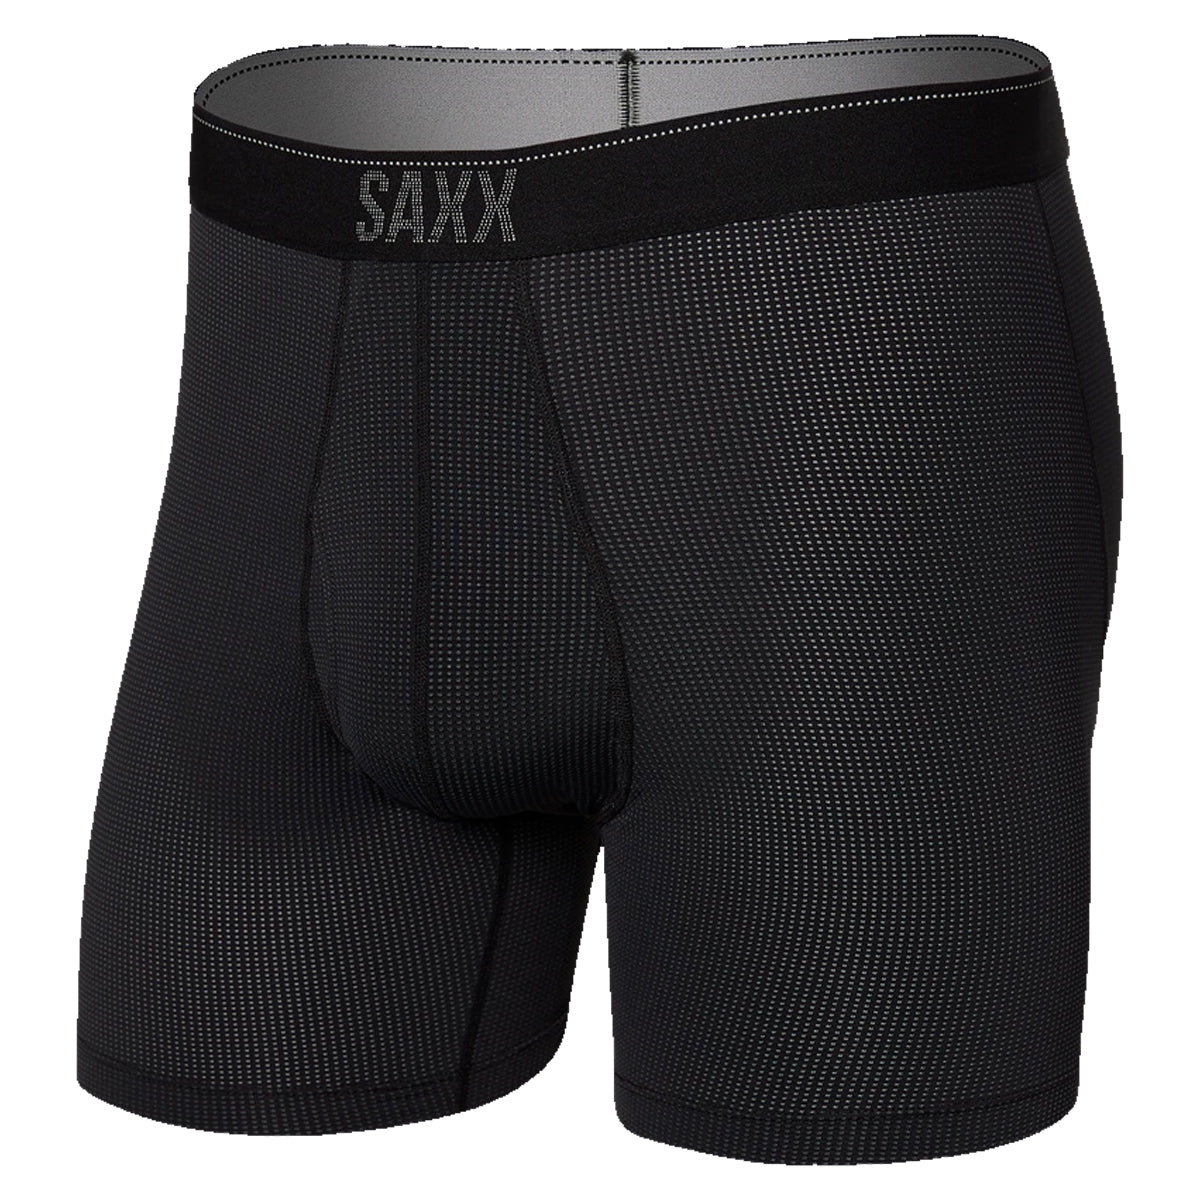 SAXX Quest Short Boxer Brief